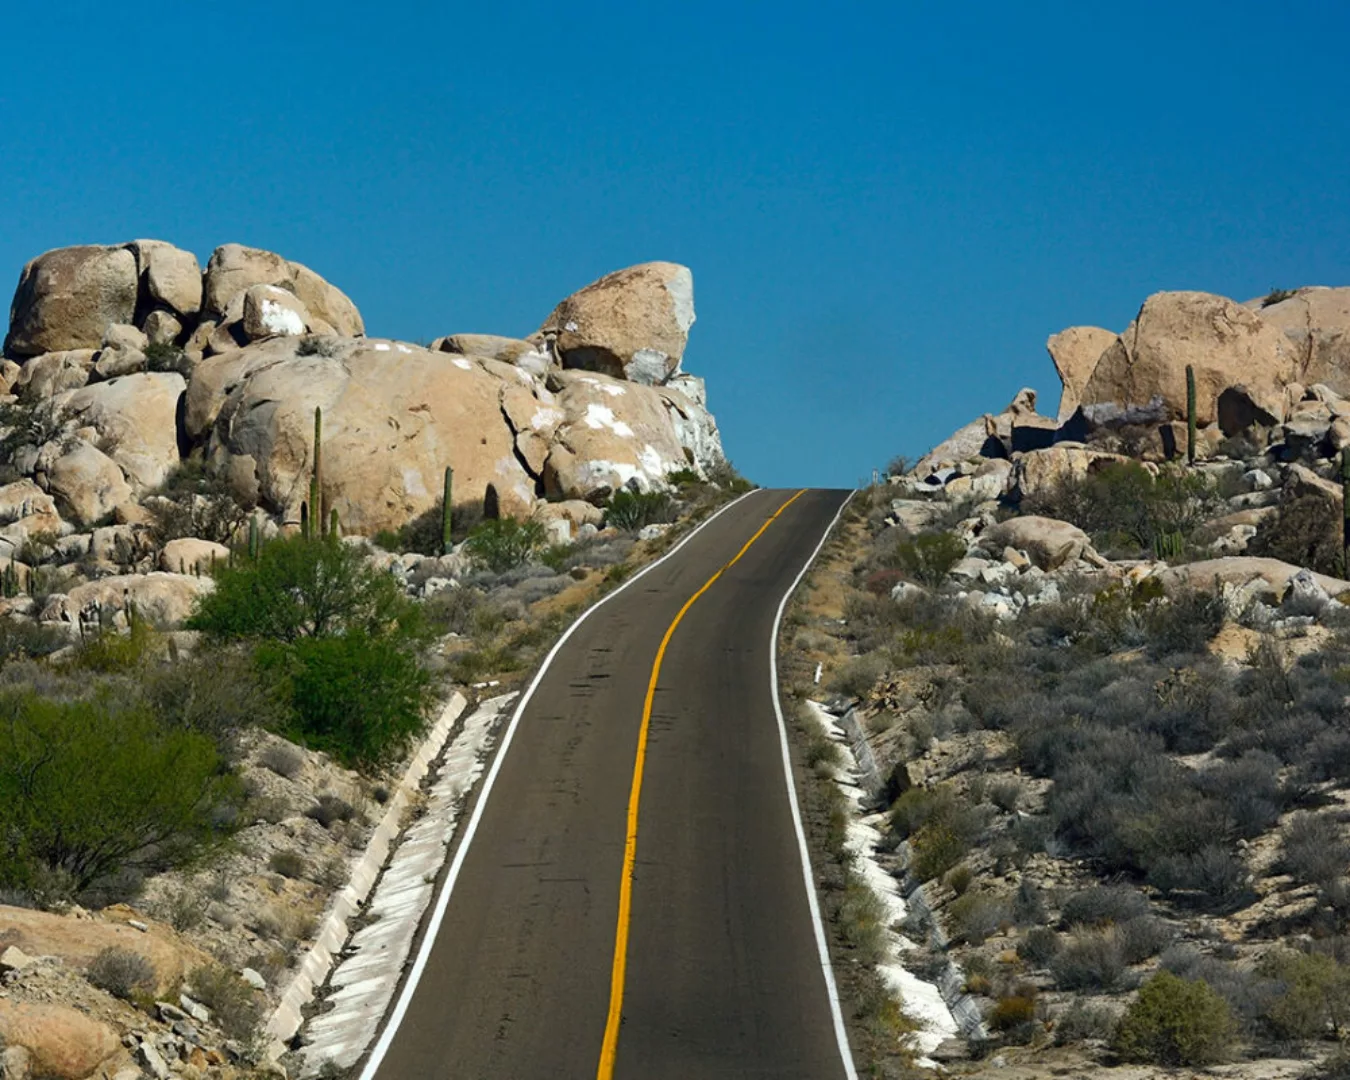 Fototapete "Roadtrip USA" 4,00x2,50 m / Glattvlies Perlmutt günstig online kaufen